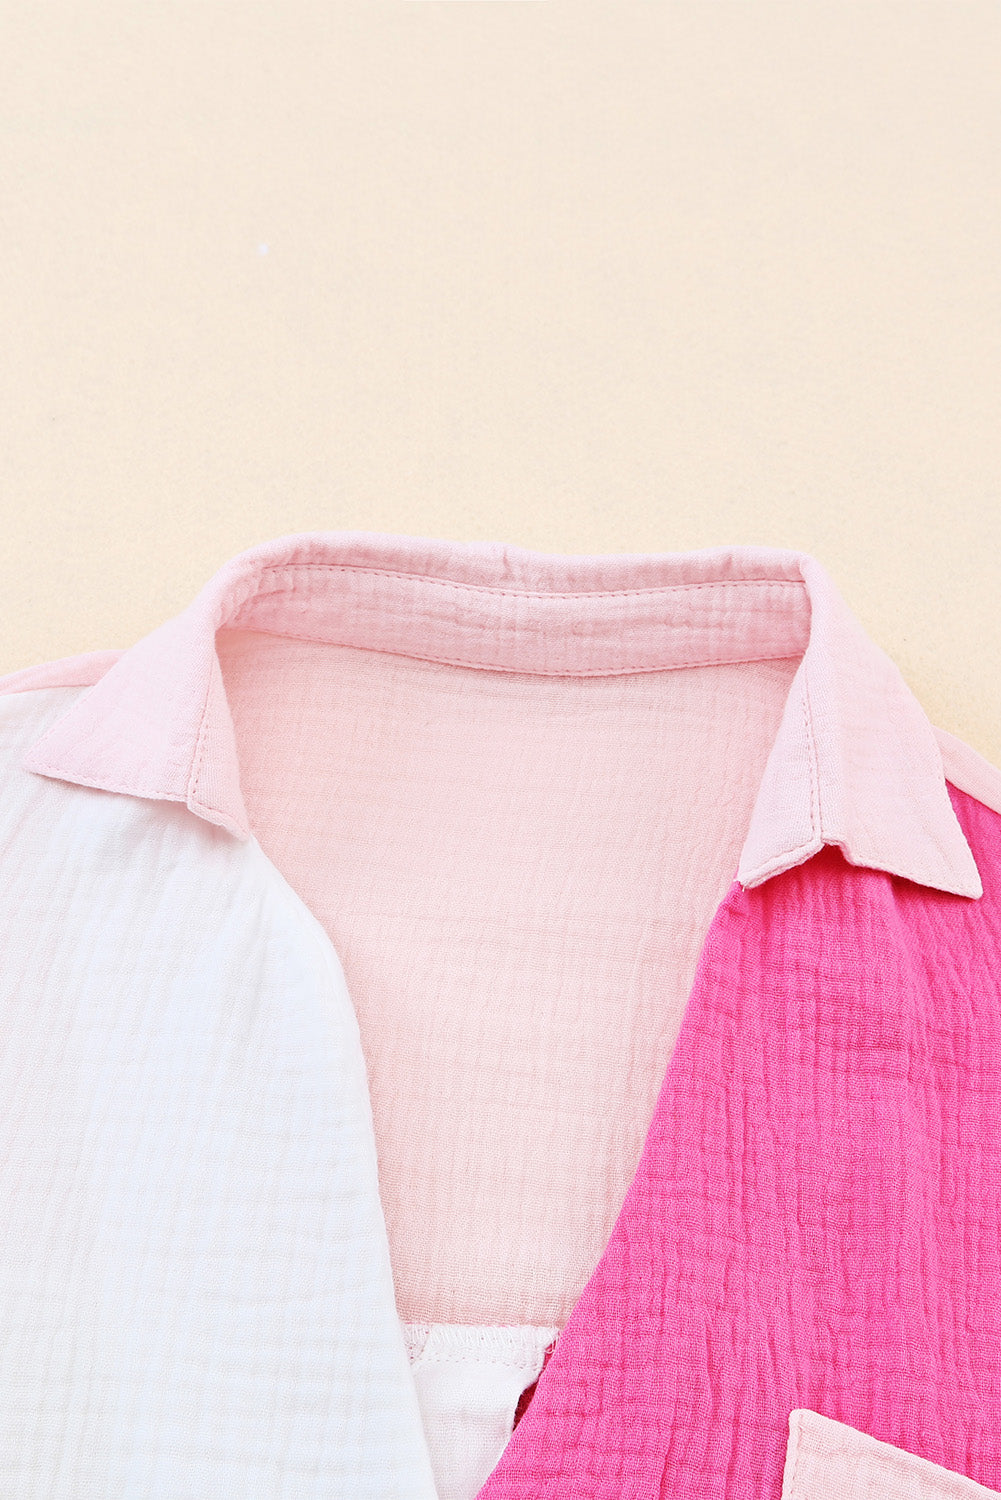 Rose Collared Neck Color Block Polo Shirt